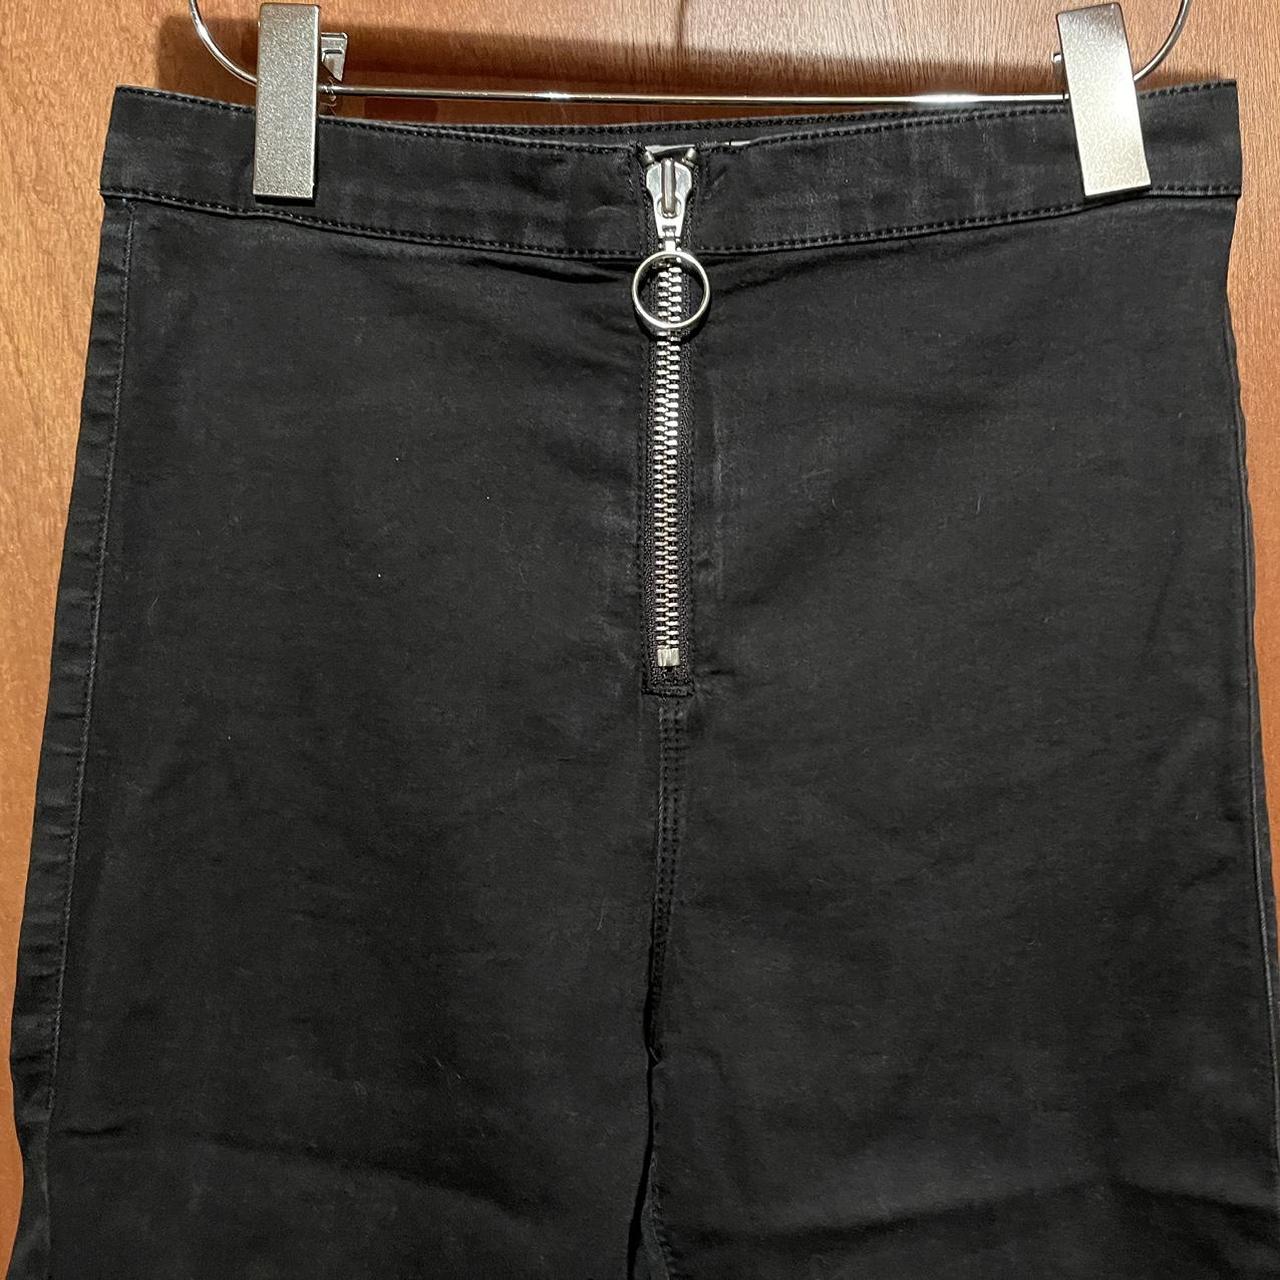 Topshop tall black jeans - Depop